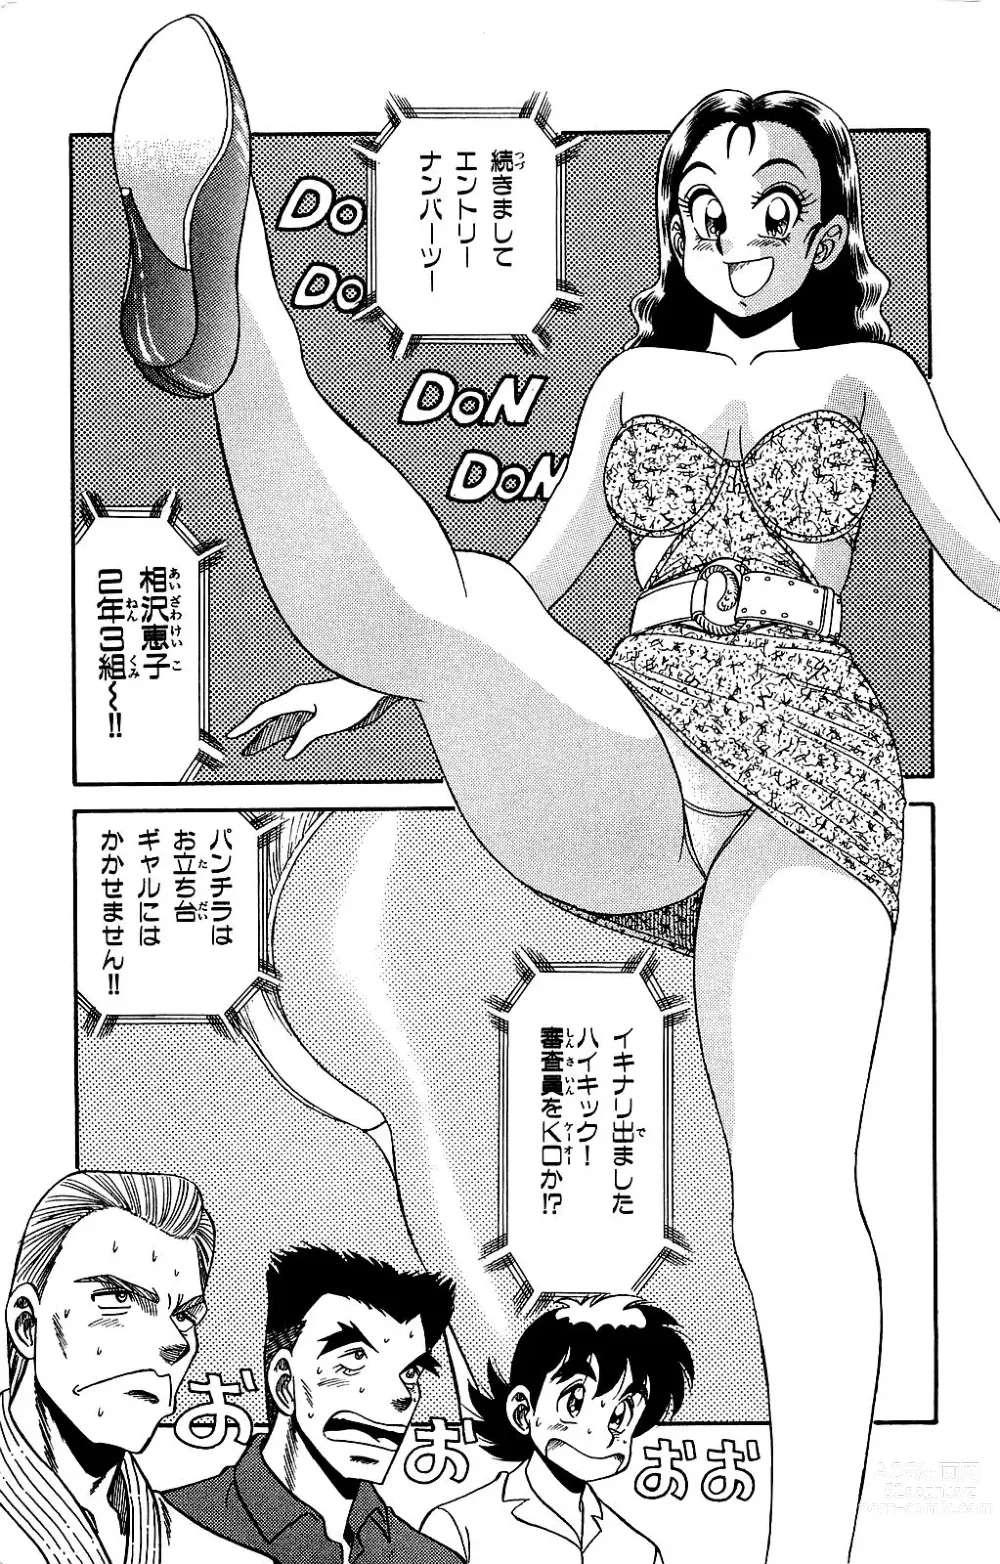 Page 25 of manga Orette Piyoritan Vol. 2